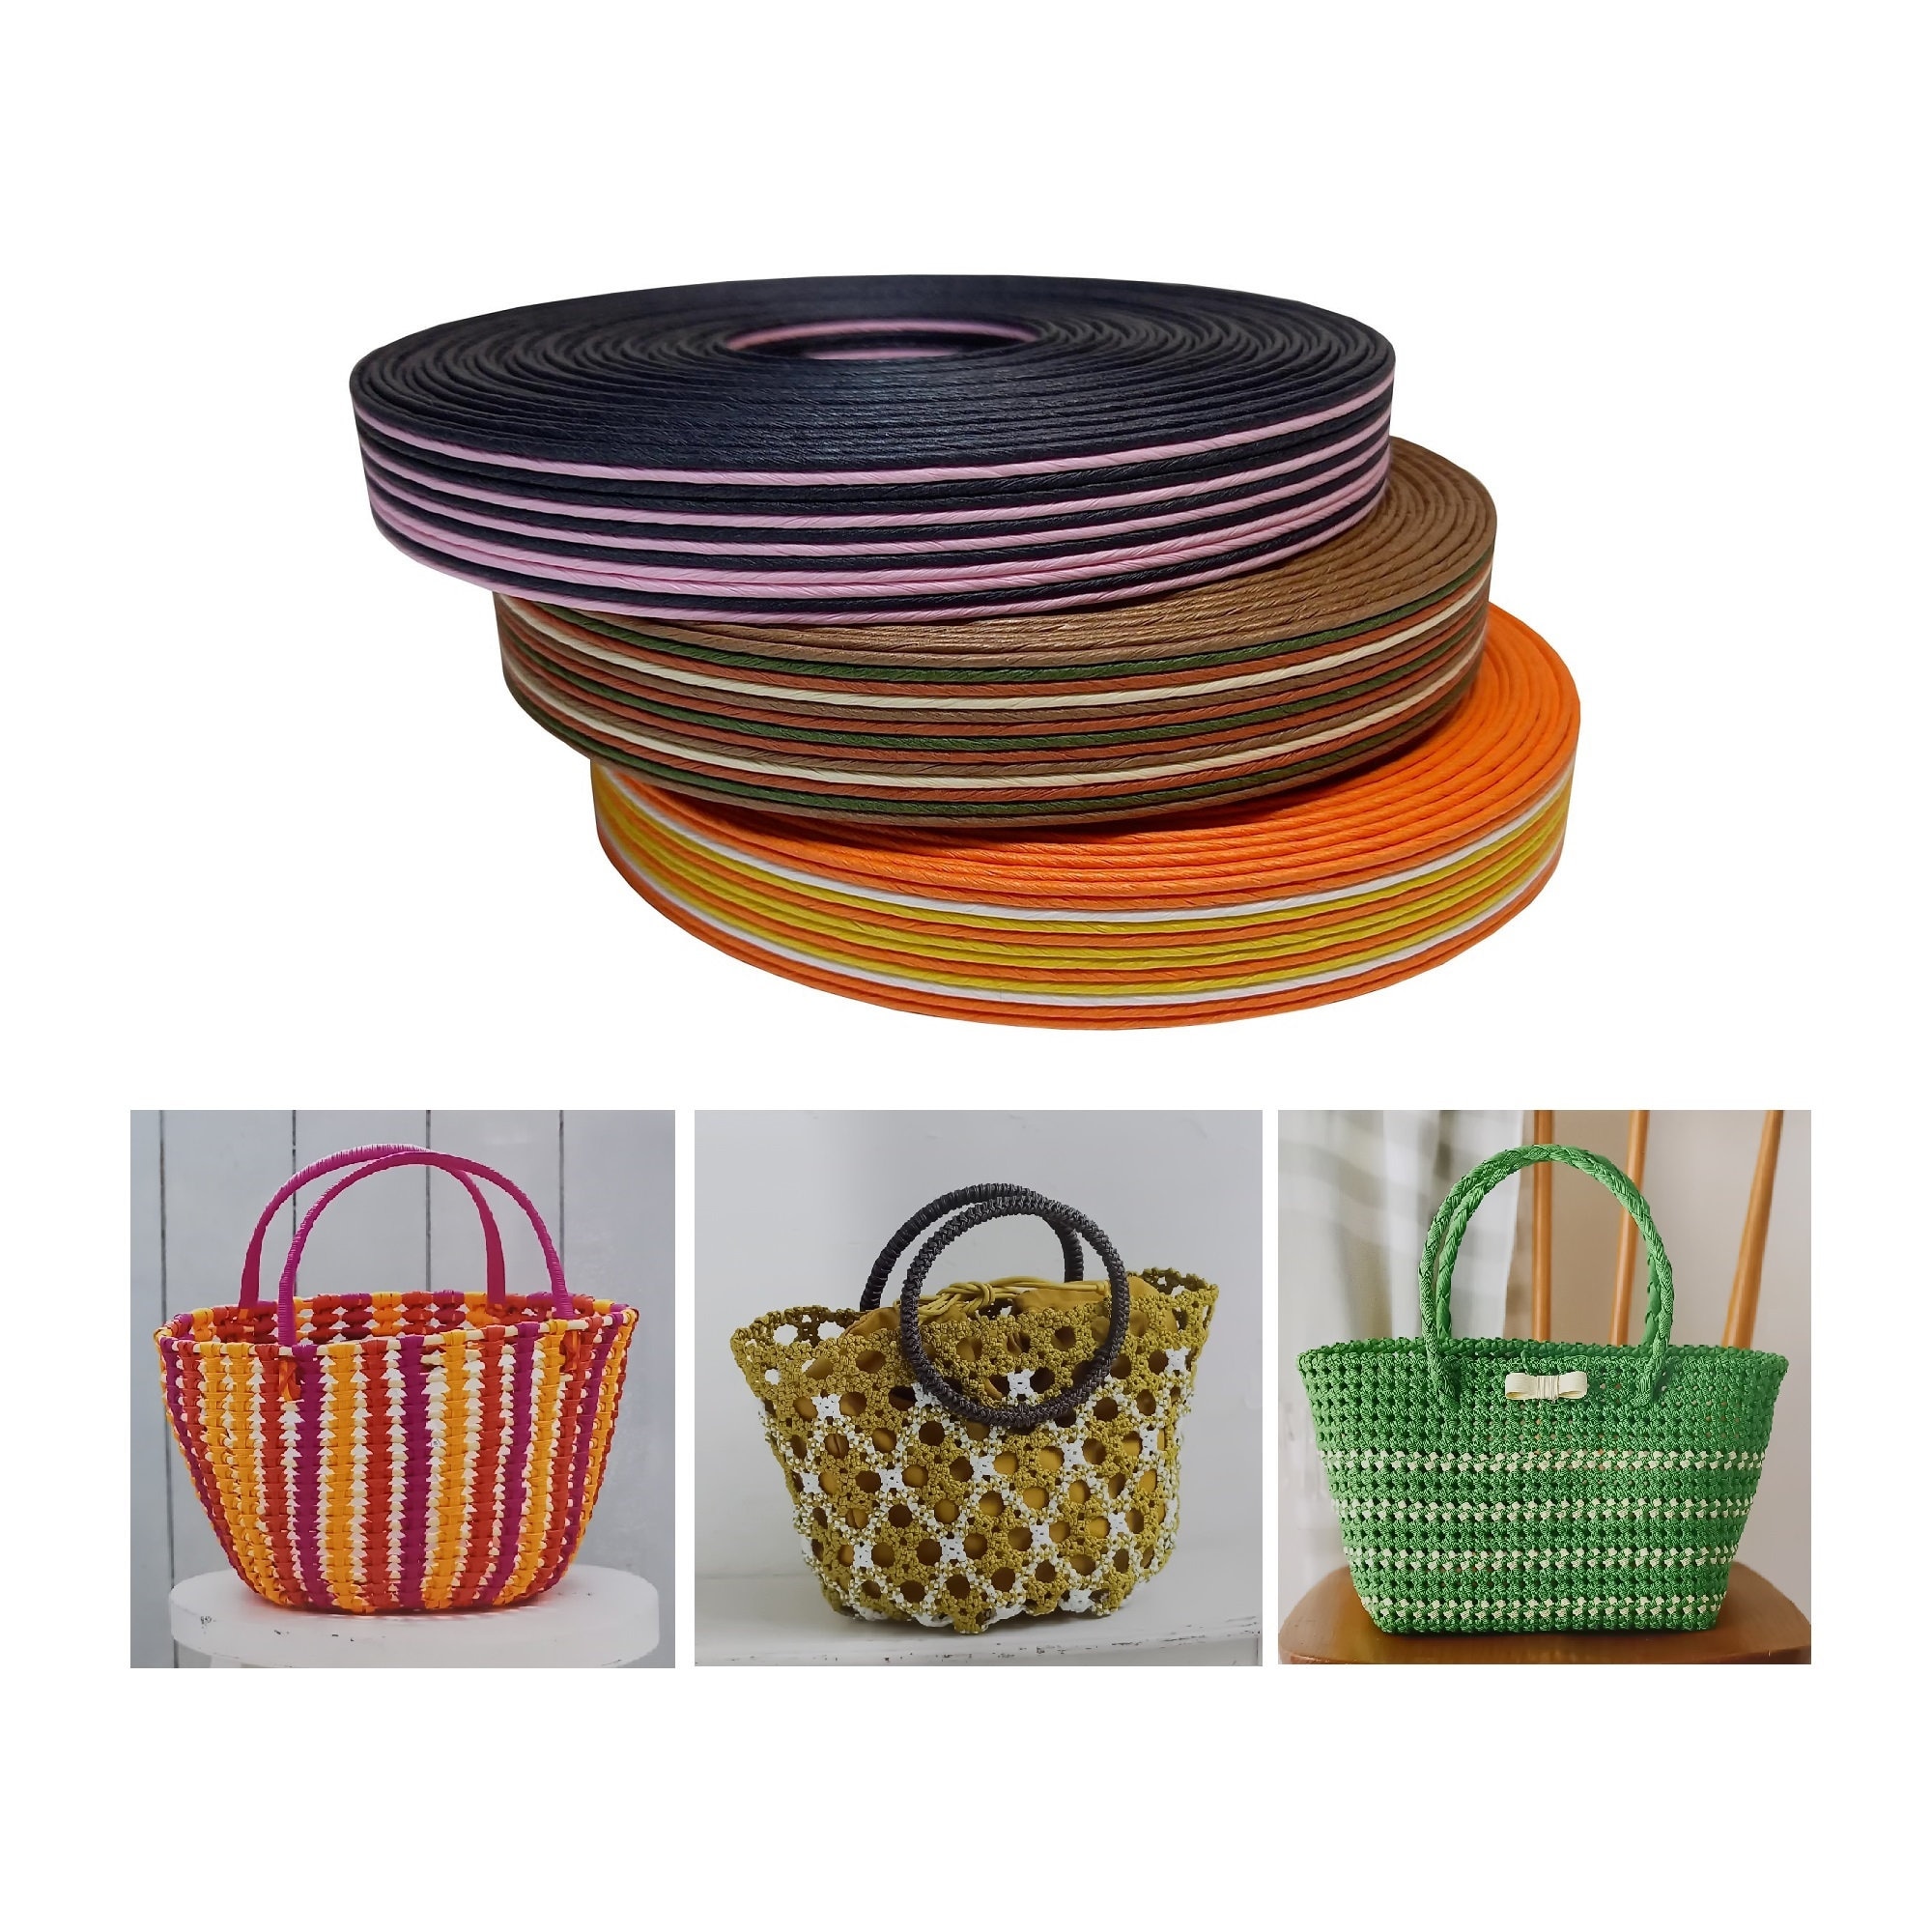 Little Egg Basket Weaving Kit, Basket Making Kit, 4H Project, VBS, Scout,  Homeschool Project, Basketry, Reed Supplies, Craft Kit, 